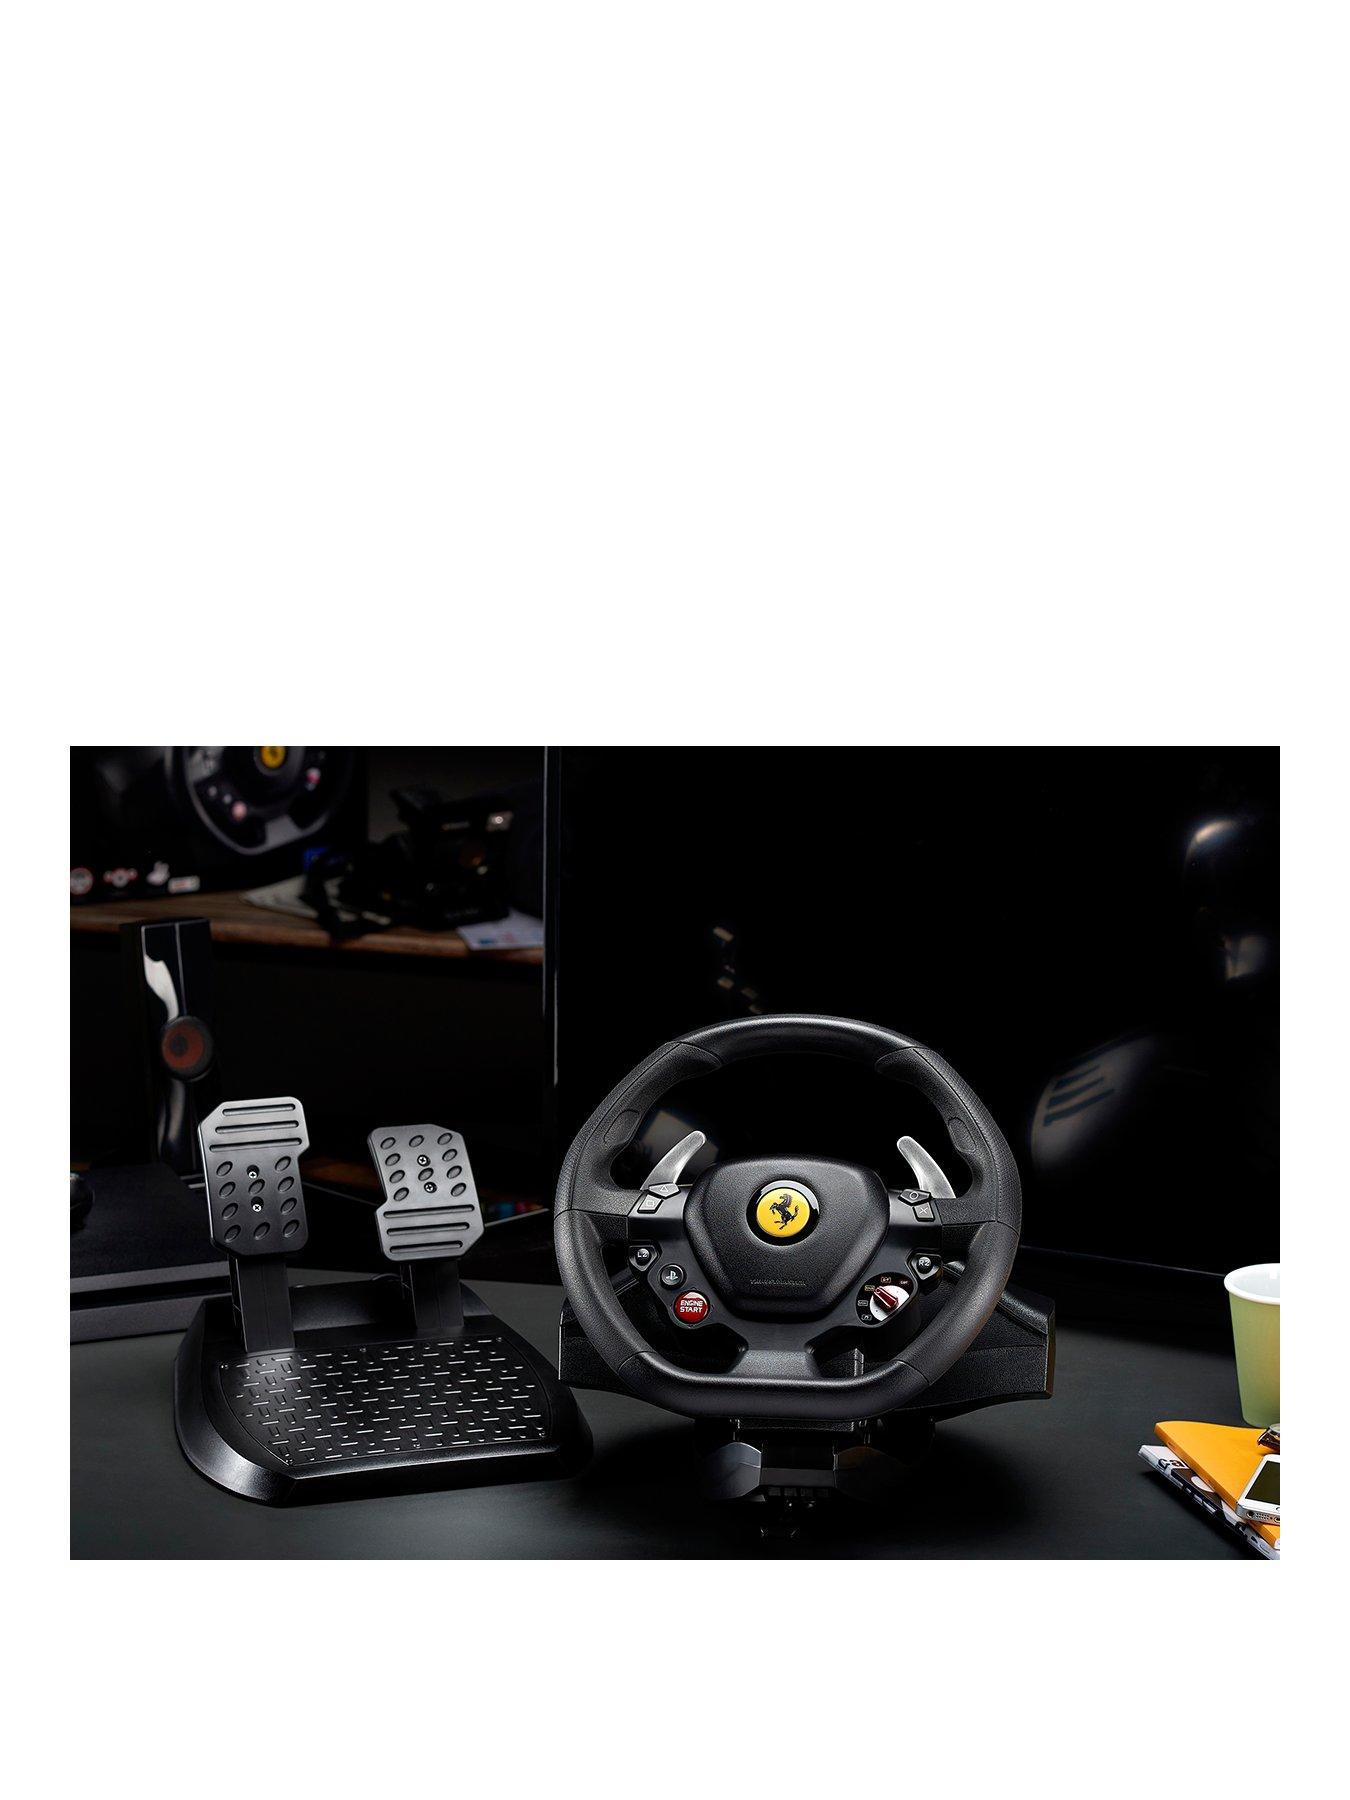 Thrustmaster T80 Ferrari 488 GTB Edition Racing Wheel for PS4 / PC